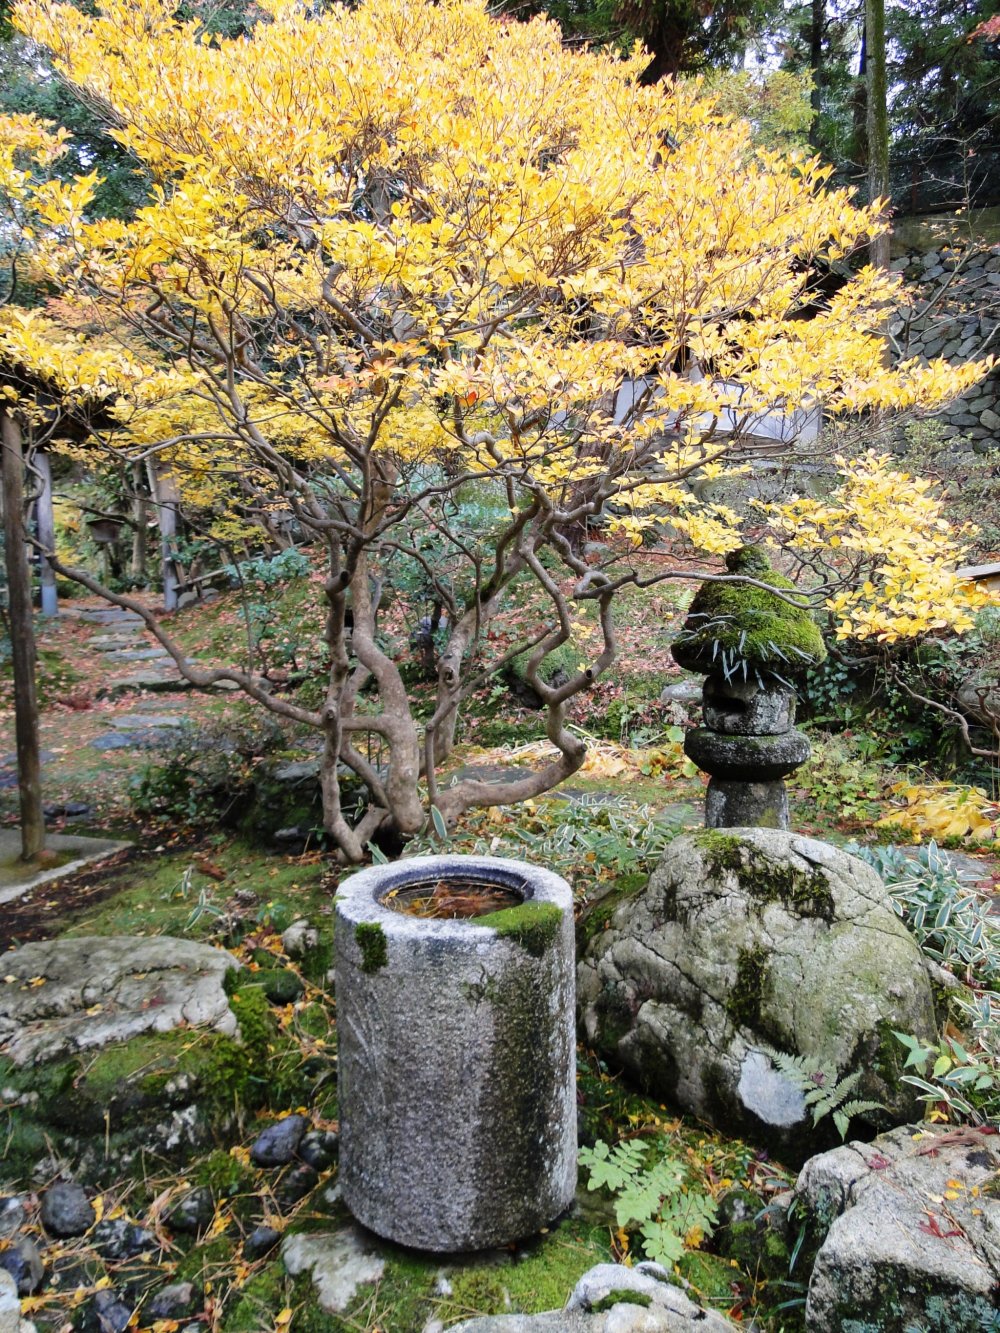 A uniquely-shaped chozubachi(water basin) in the garden